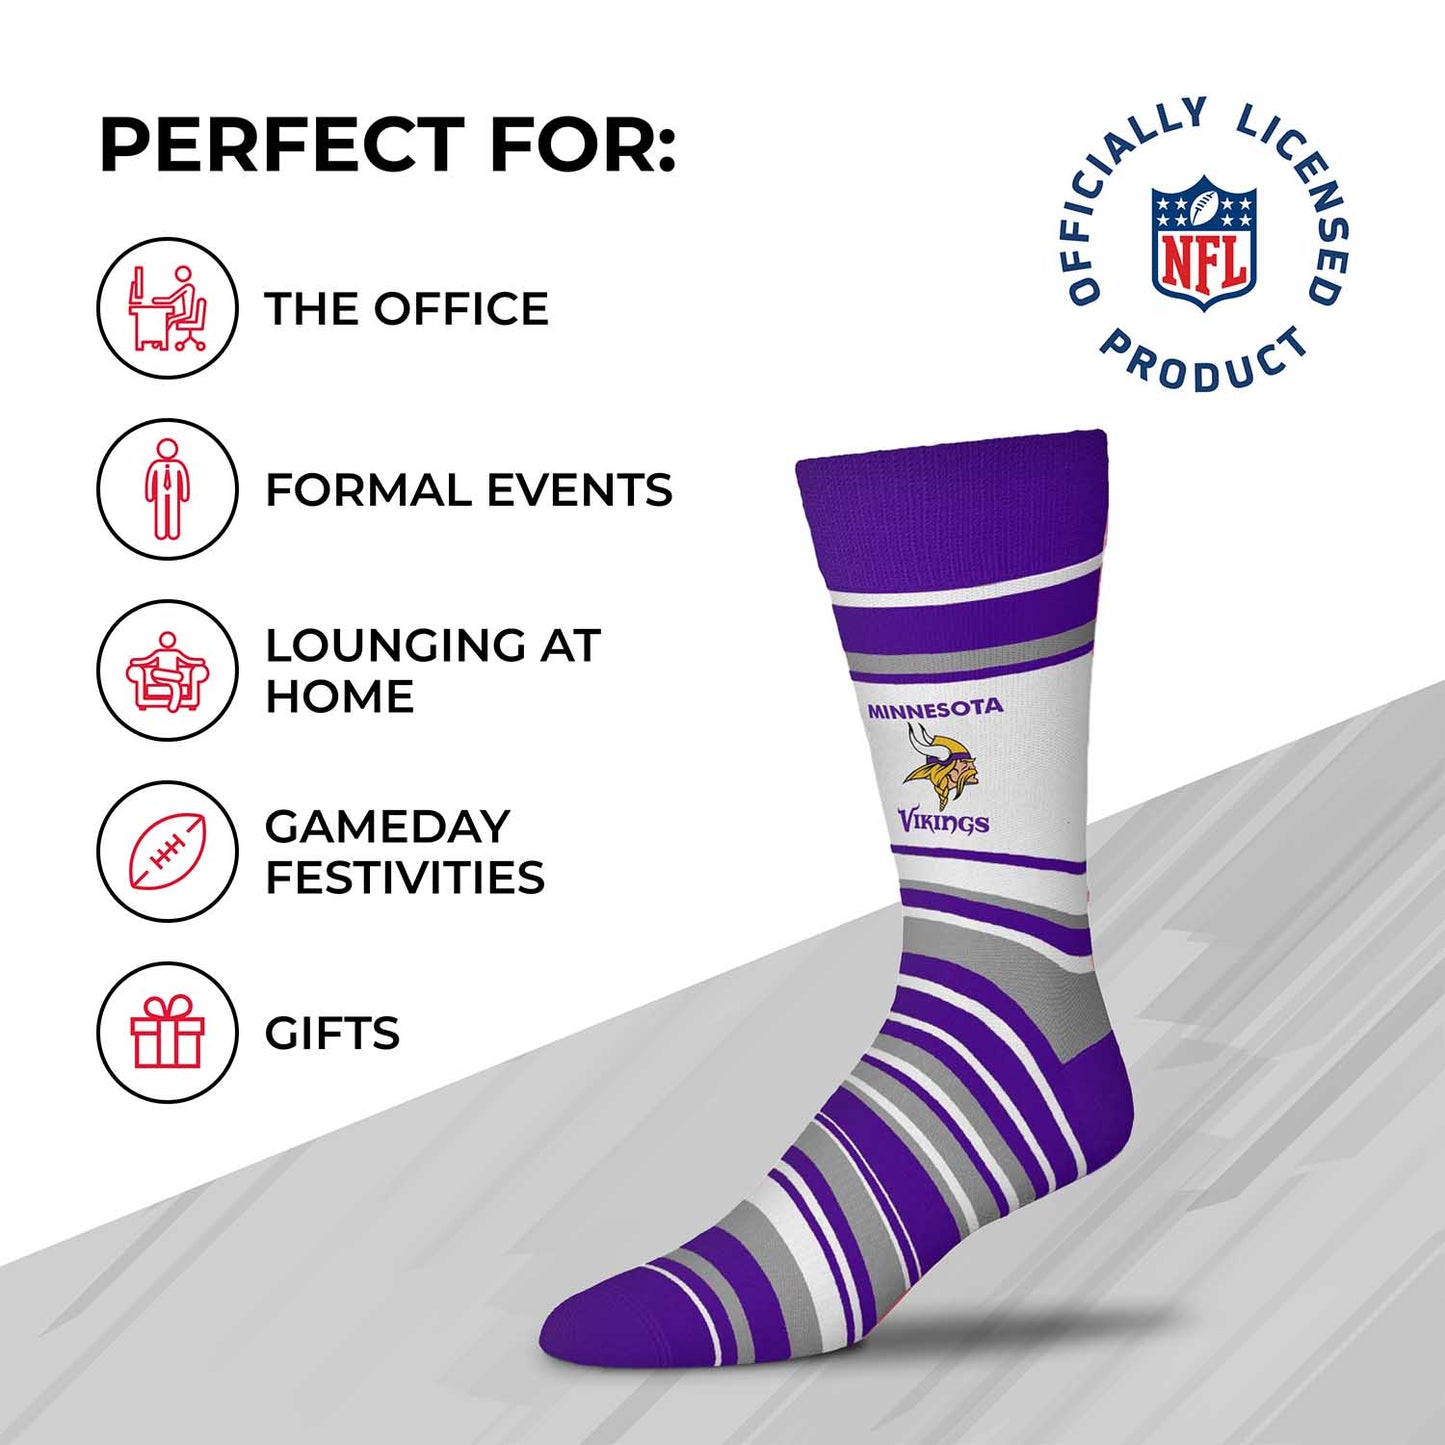 Minnesota Vikings NFL Adult Striped Dress Socks - Purple